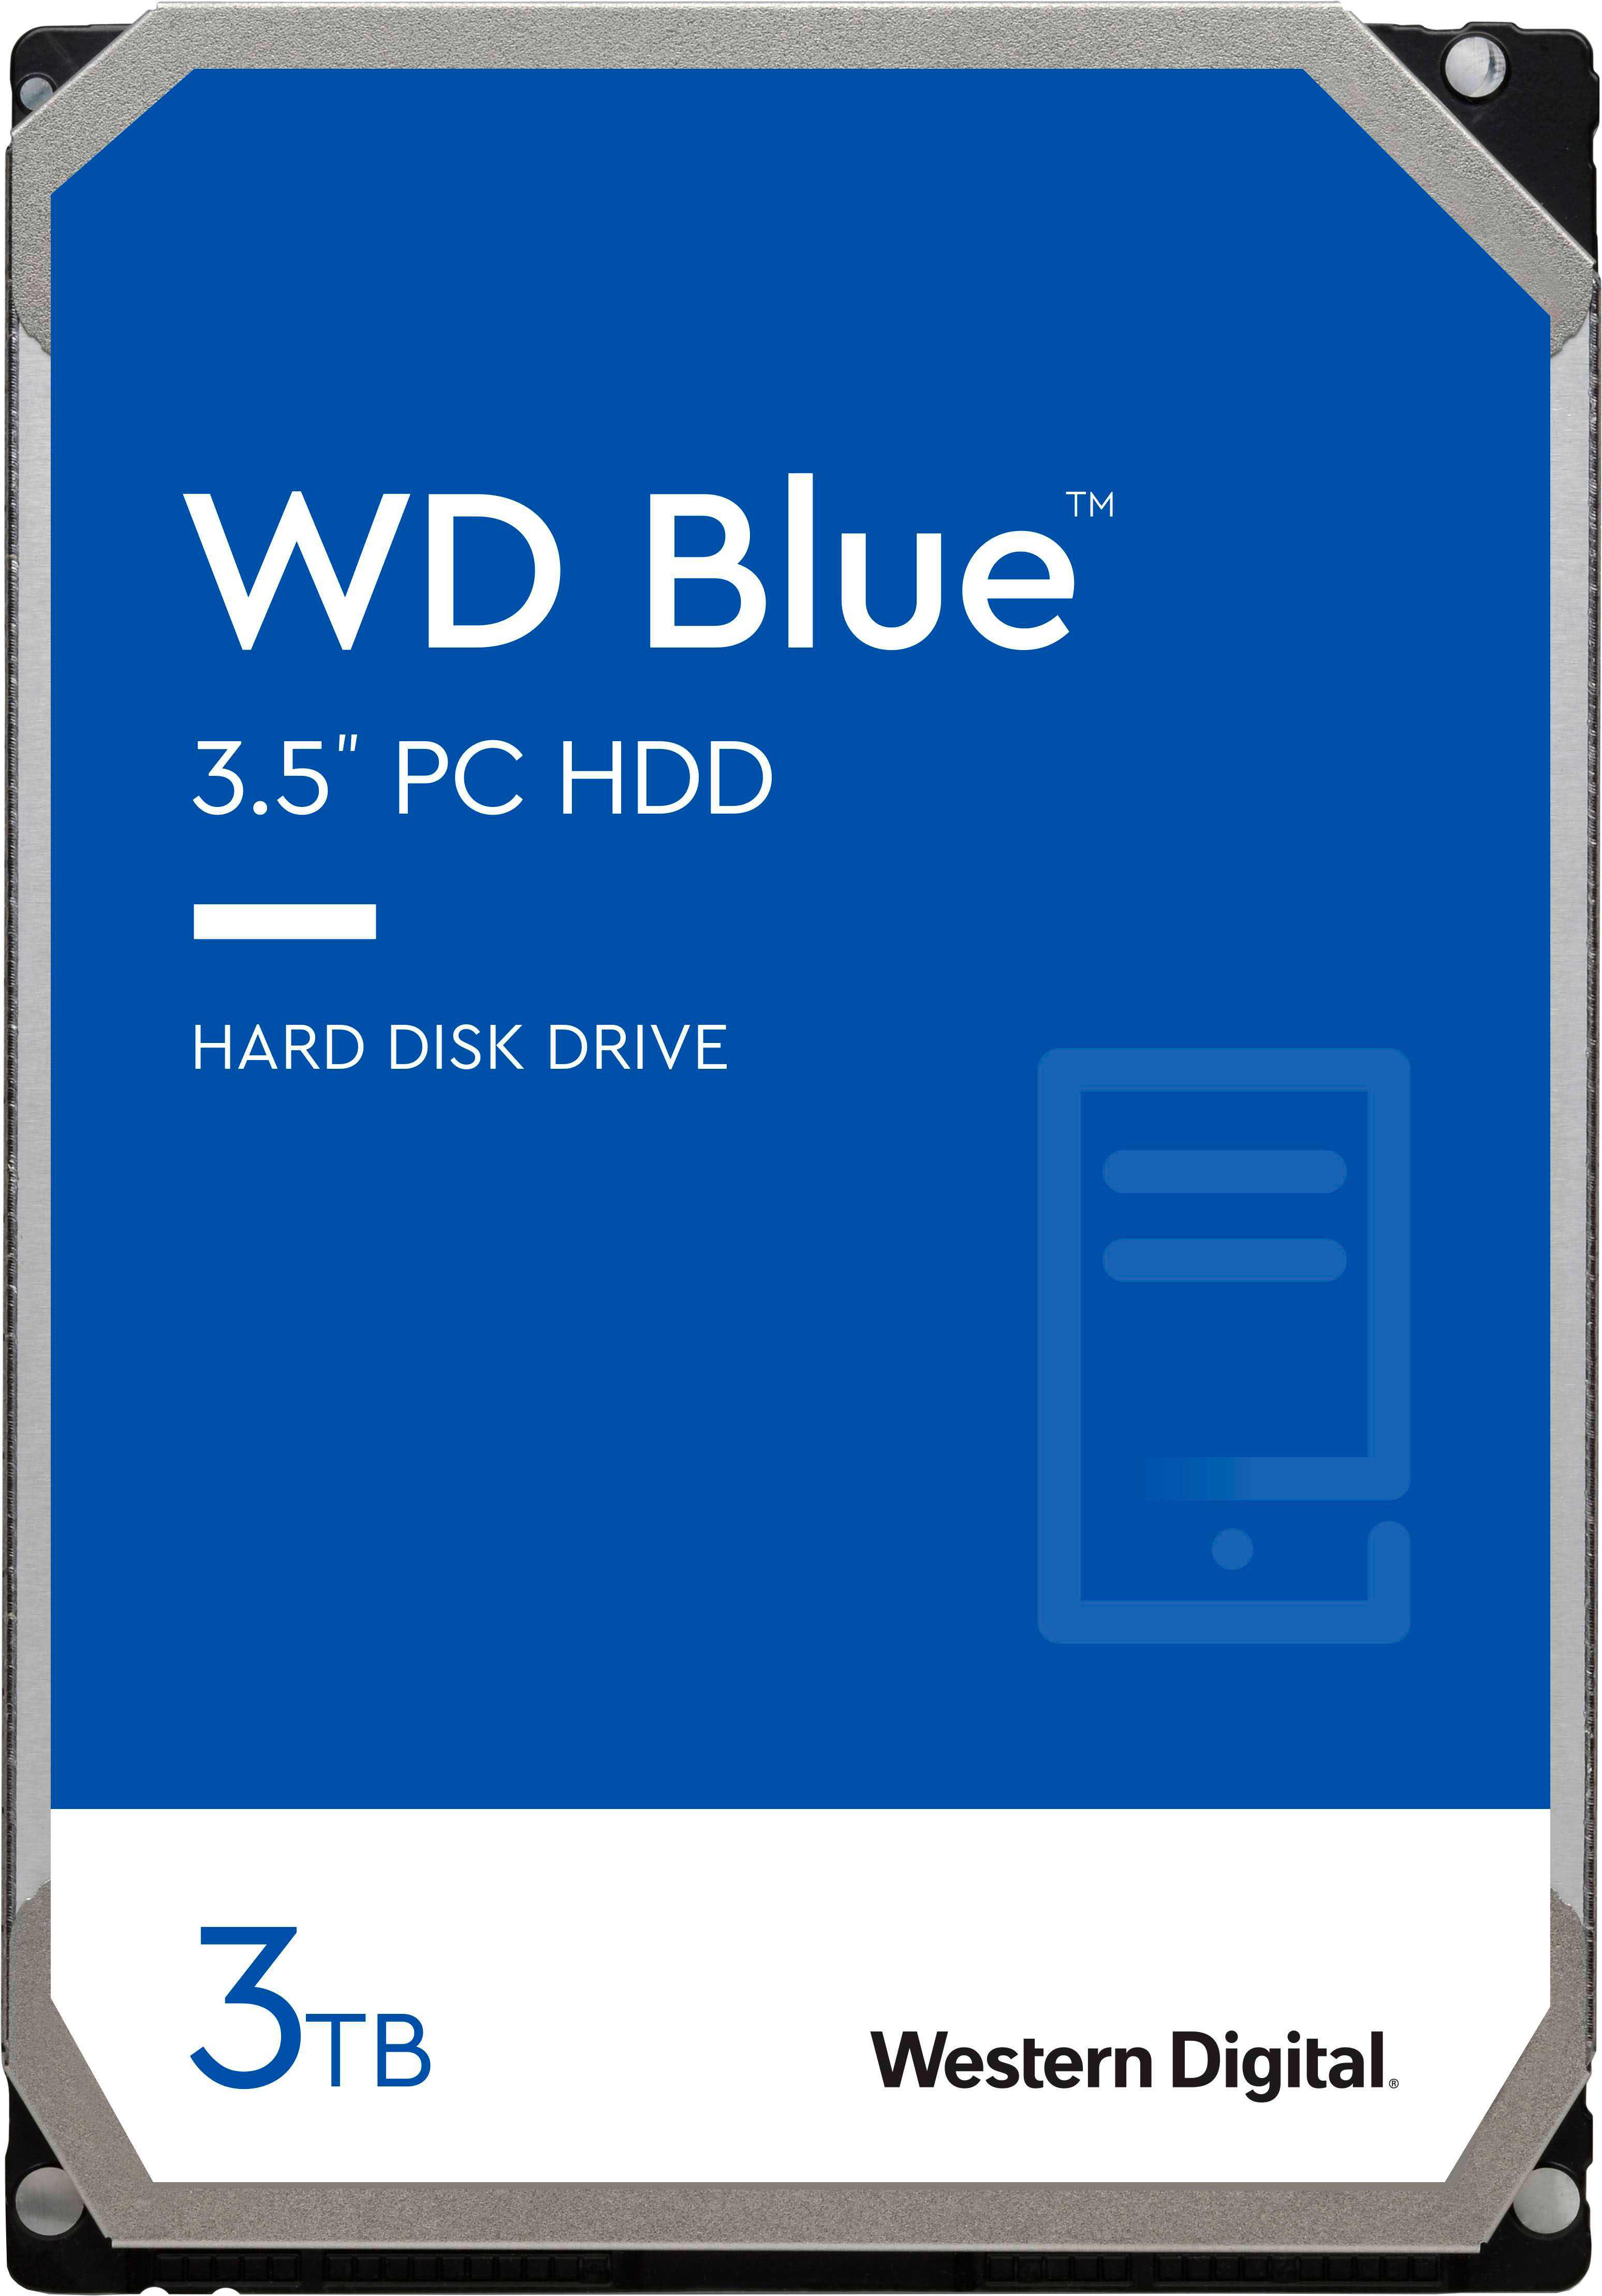 WD Blue 3TB Internal SATA Hard Drive for Desktops